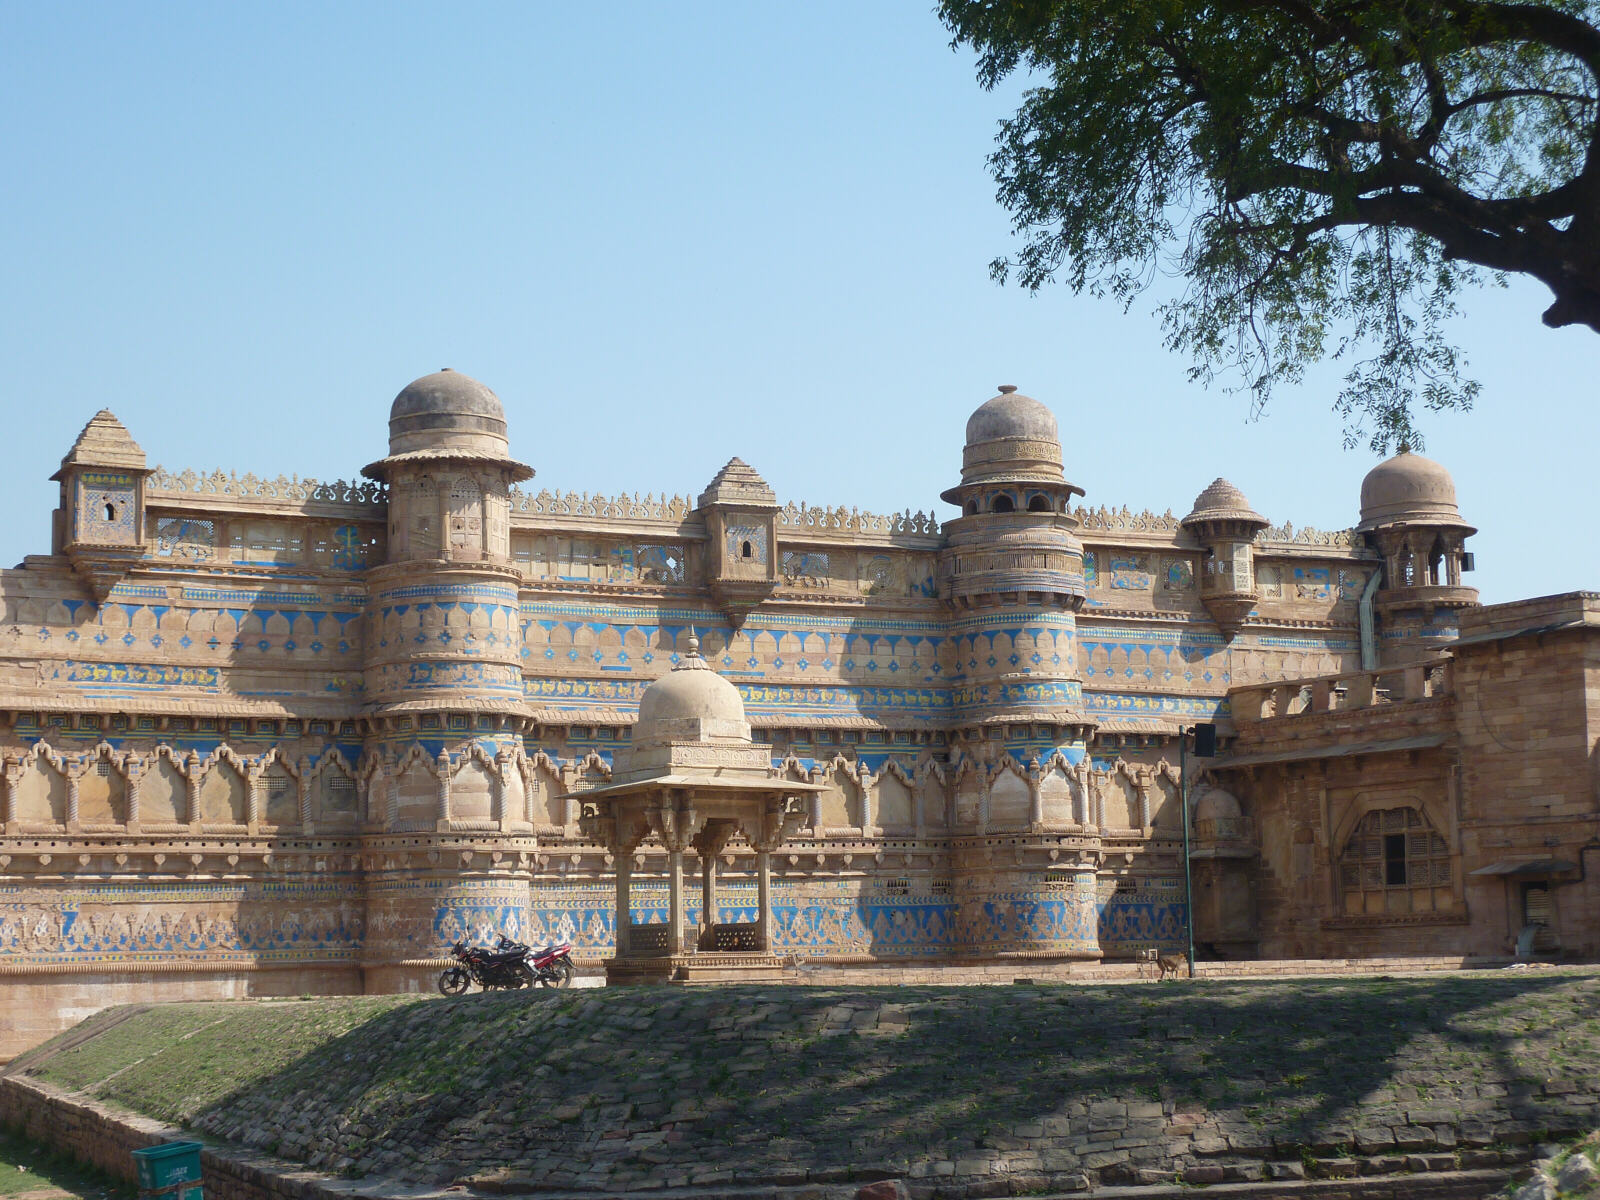 Man Singh palace in Gwalior fort, Madhya Pradesh, India